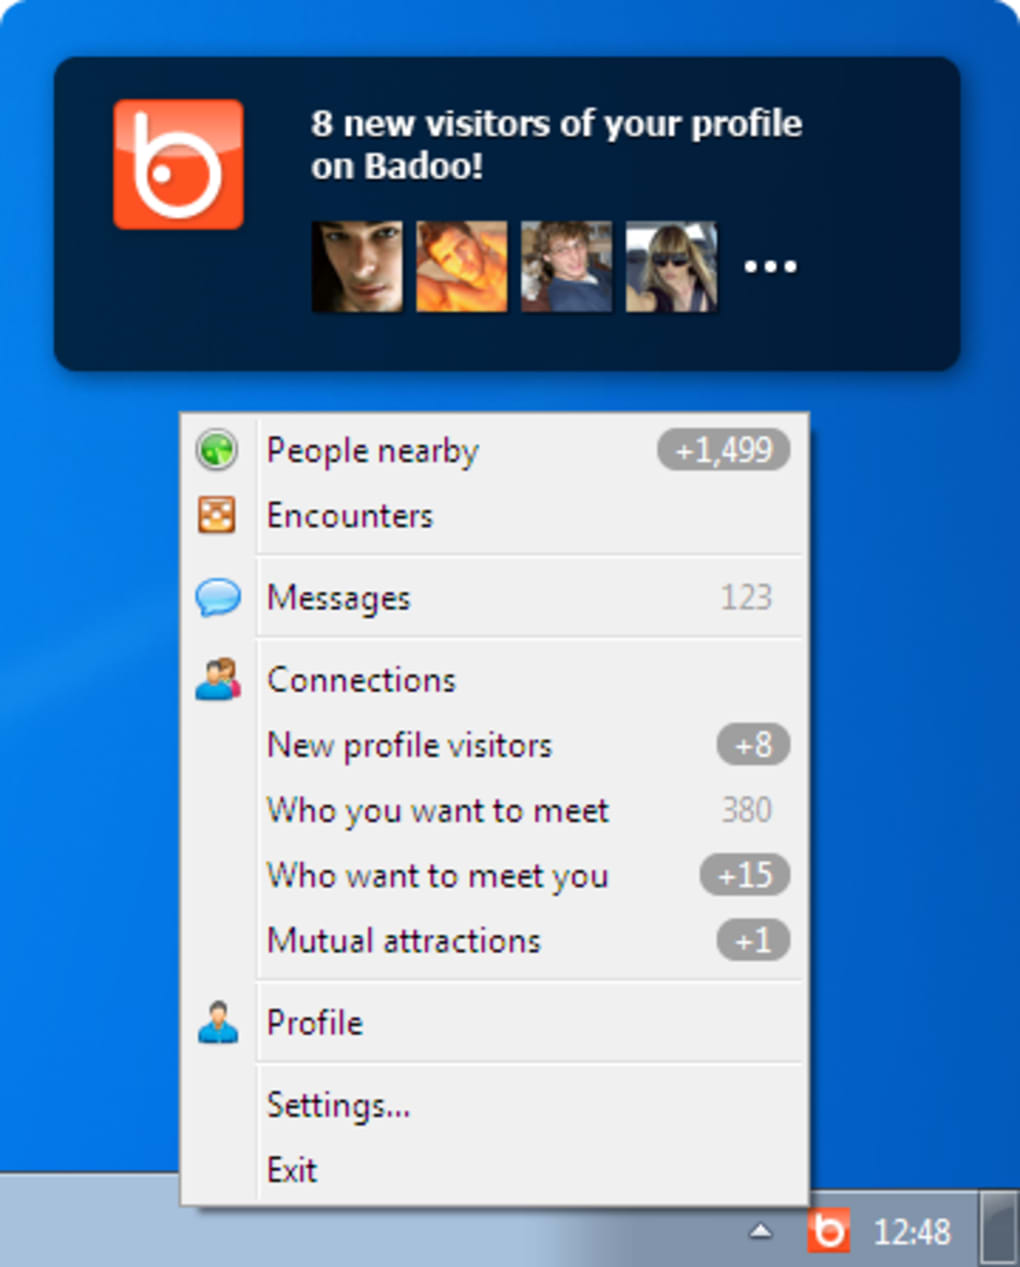 On download desktop badoo Badoo Pro